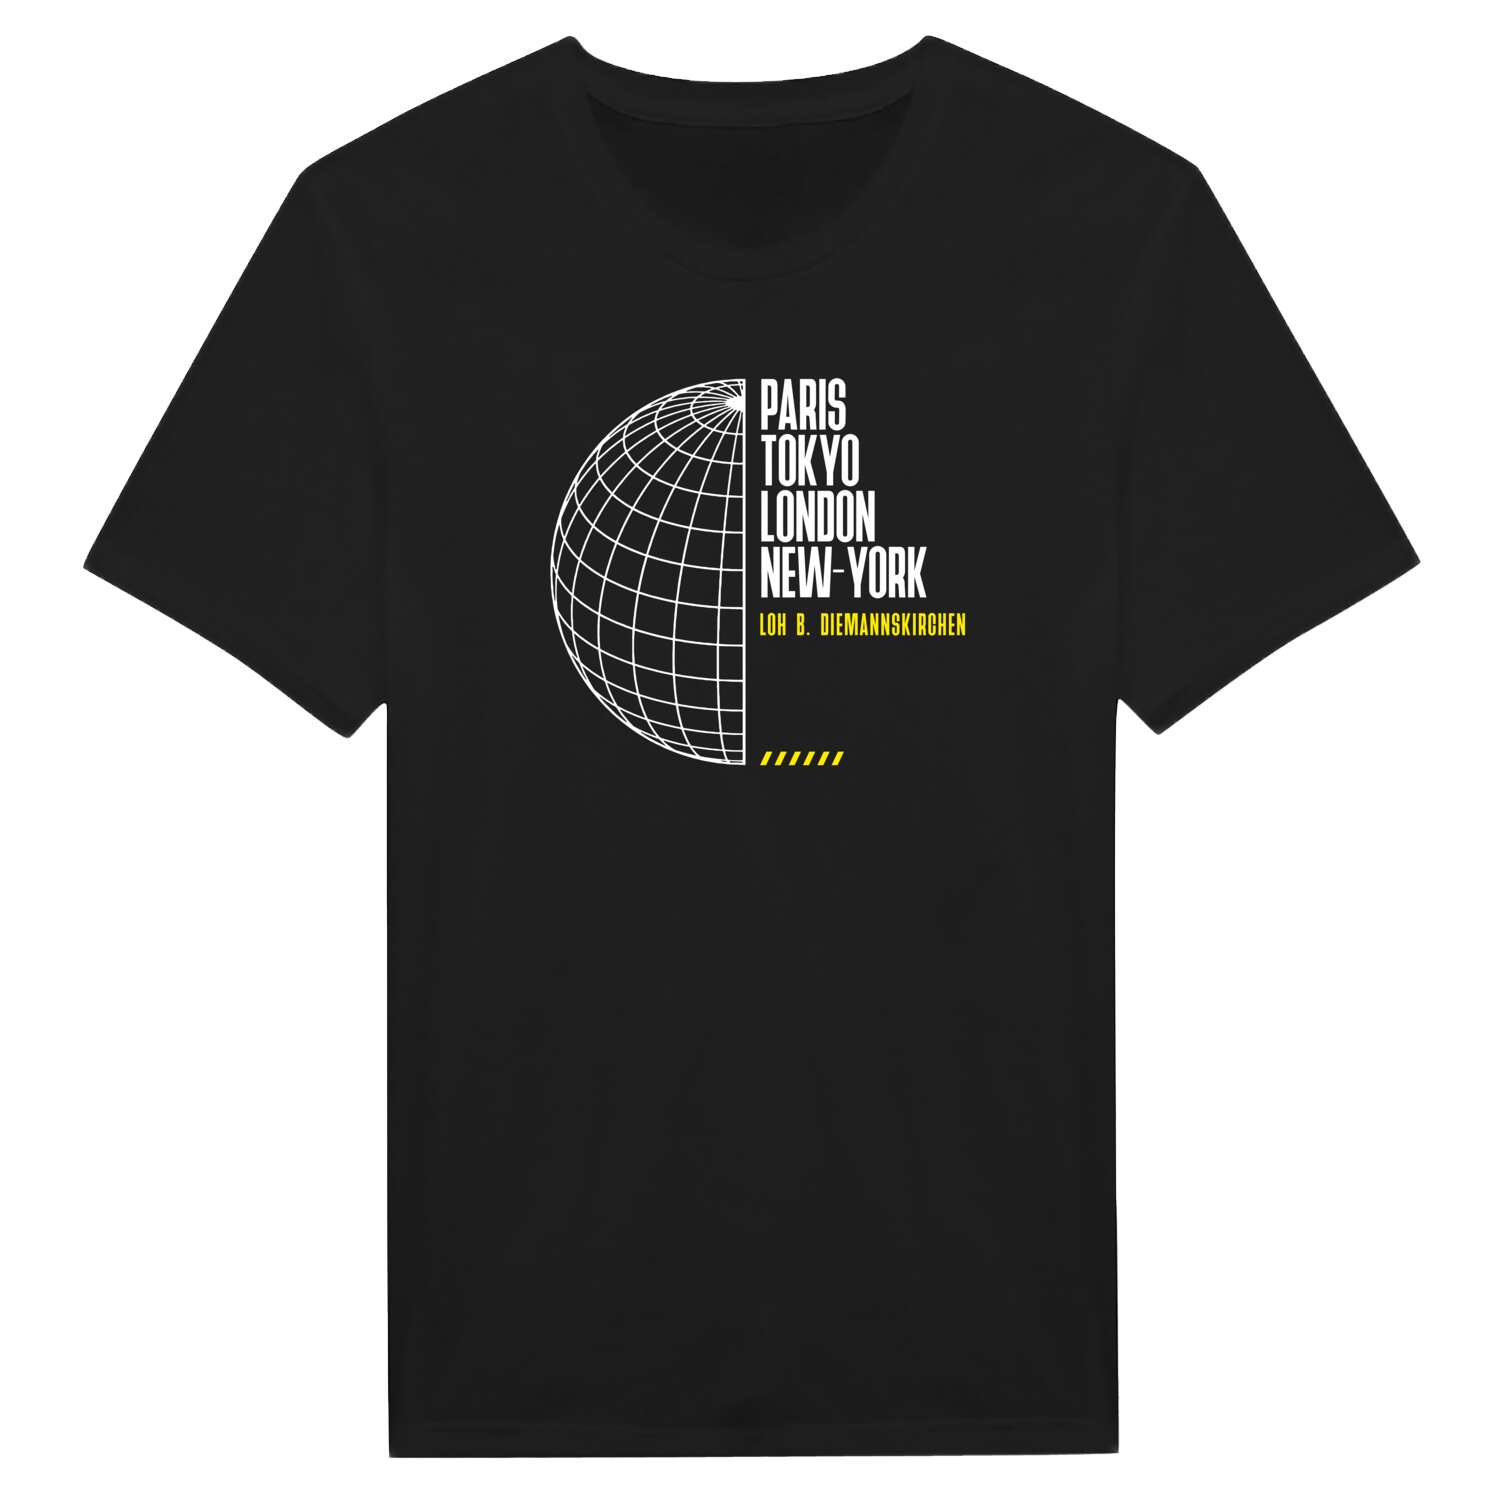 Loh b. Diemannskirchen T-Shirt »Paris Tokyo London«